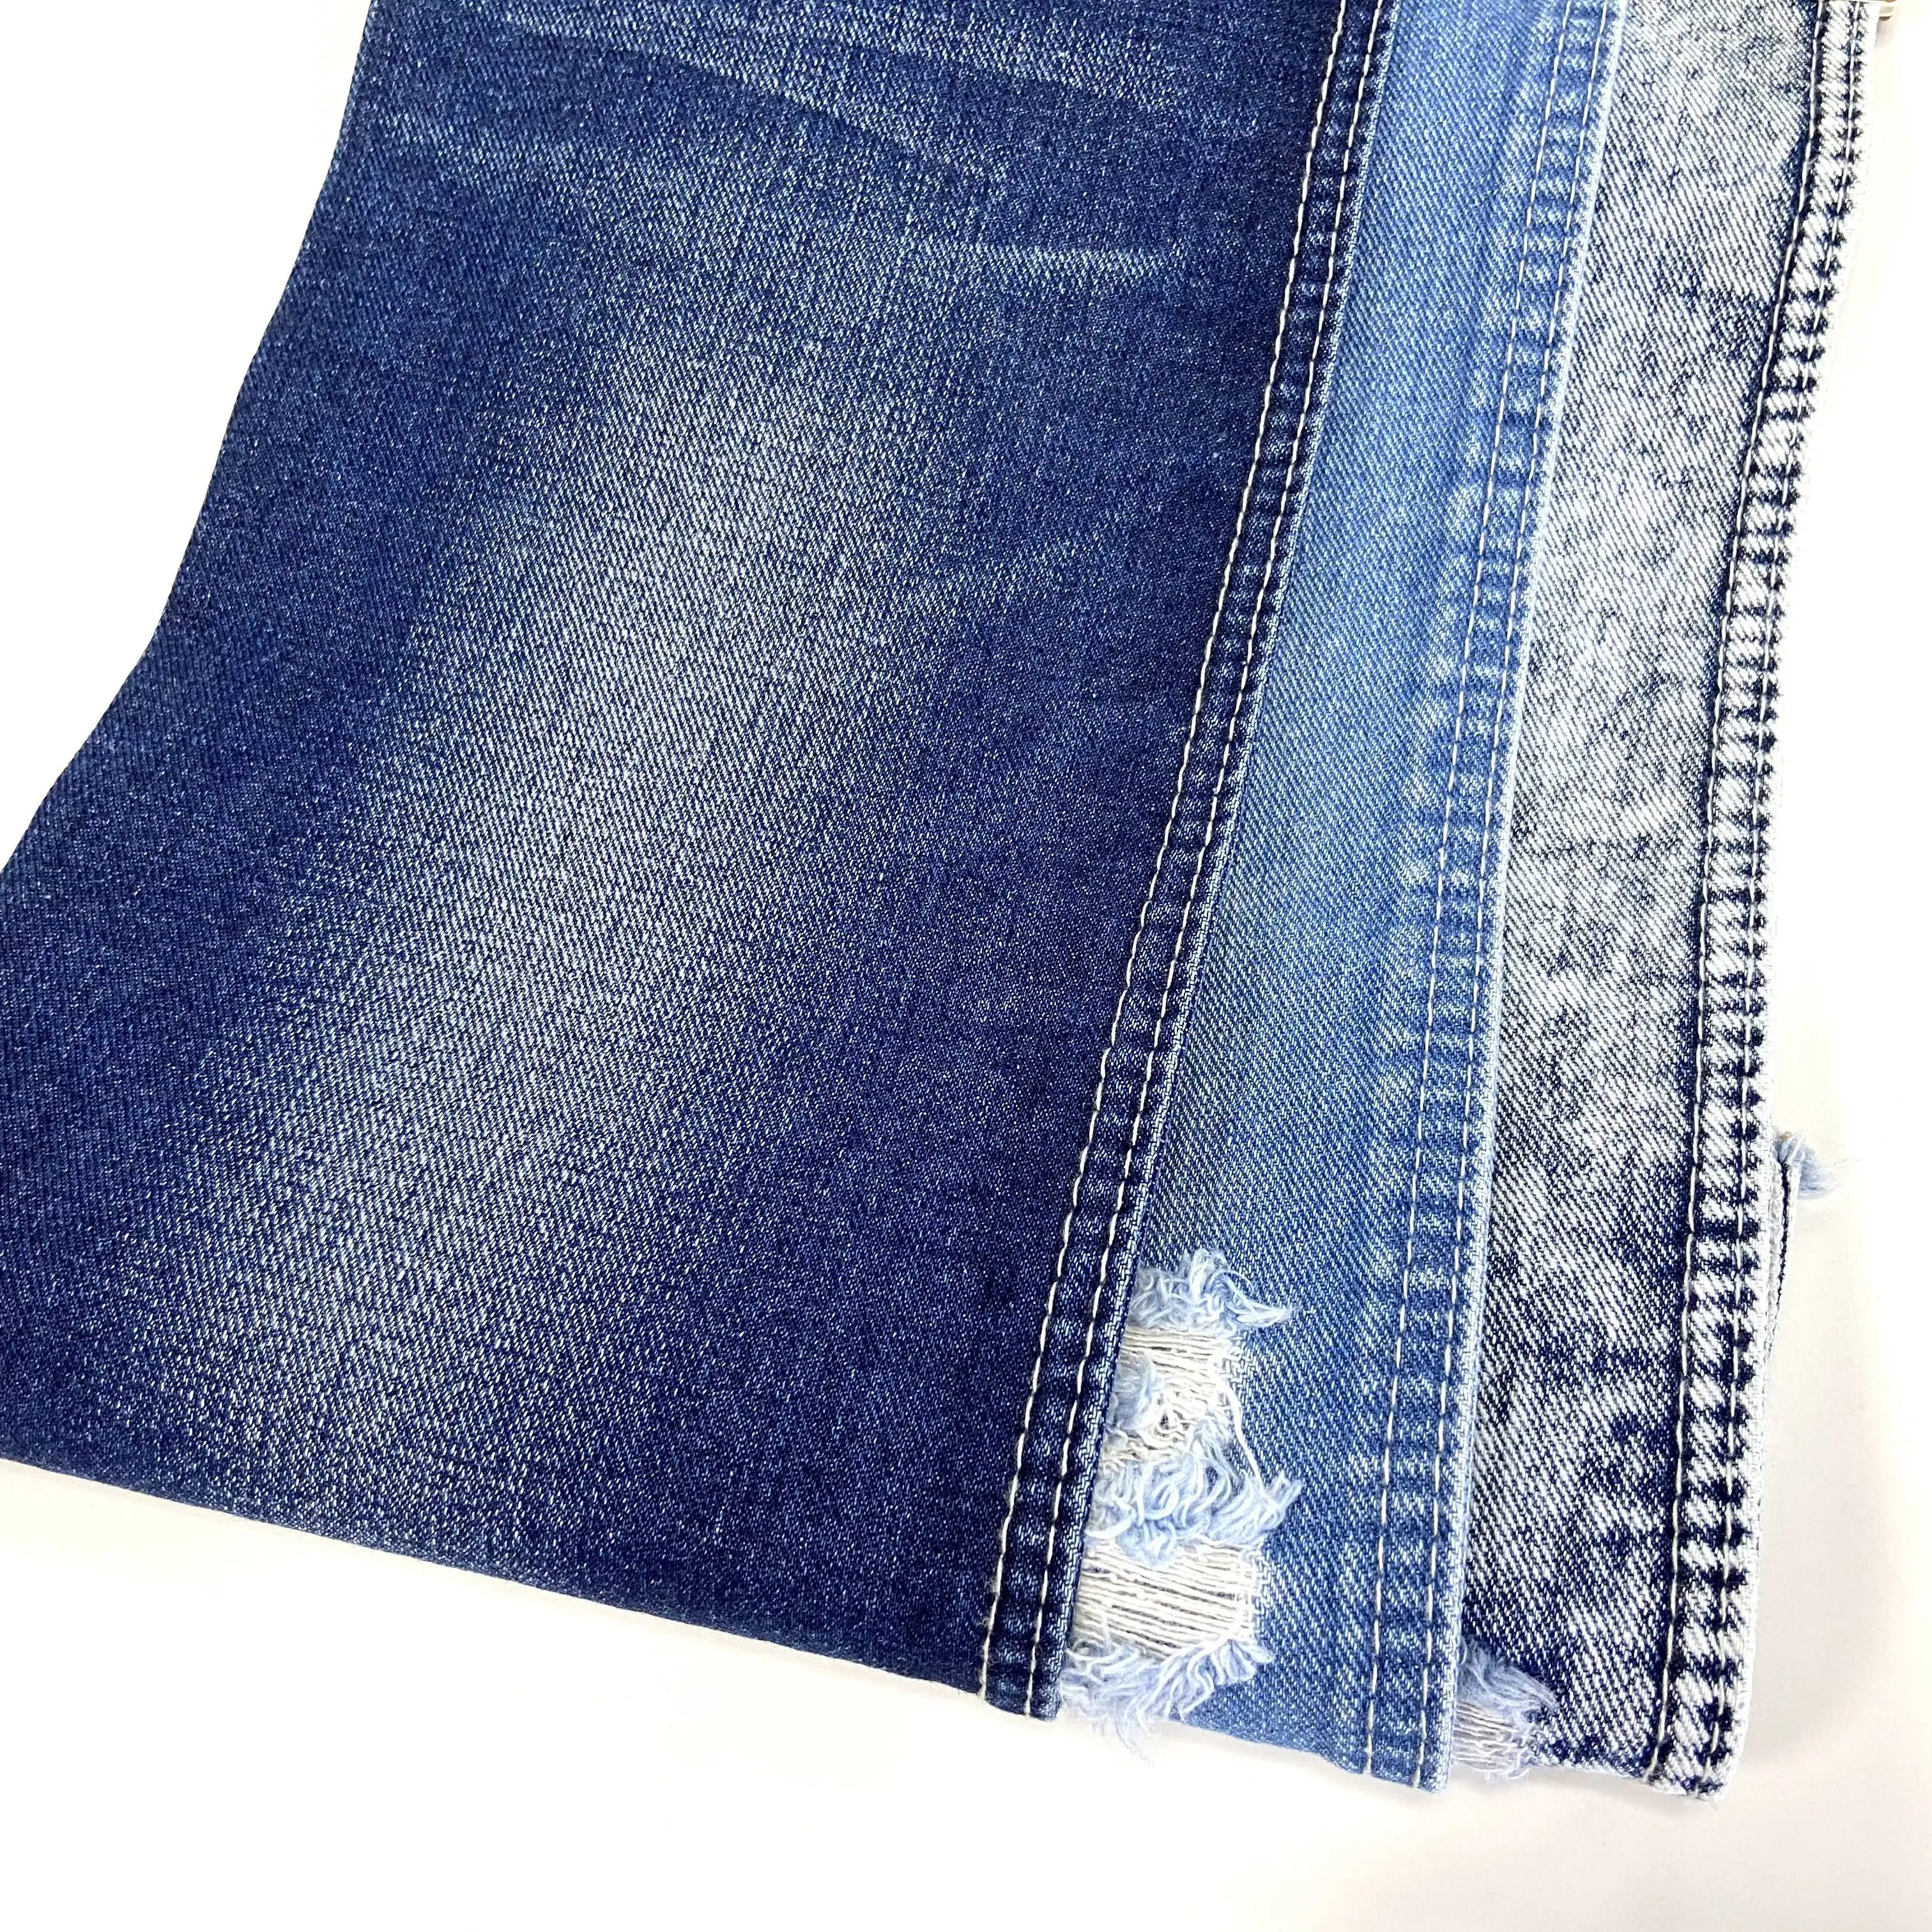 Article 9775W 405G 70/71 ''coton Spandex style dged urban star jeans diesel jeans tissu